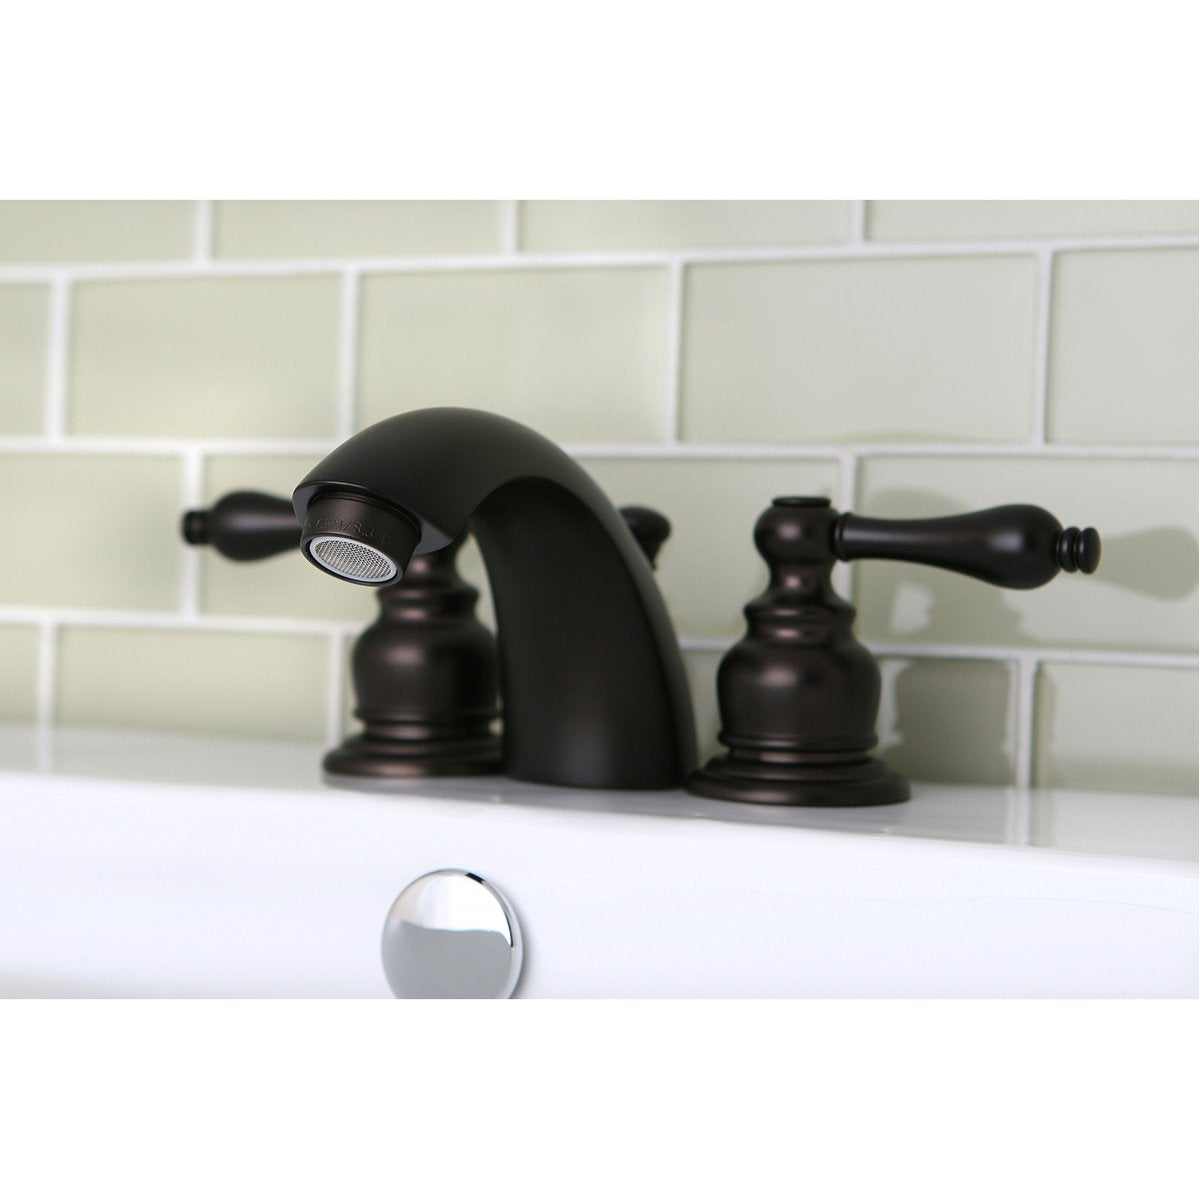 Kingston Brass Victorian Mini-Widespread Bathroom Faucet